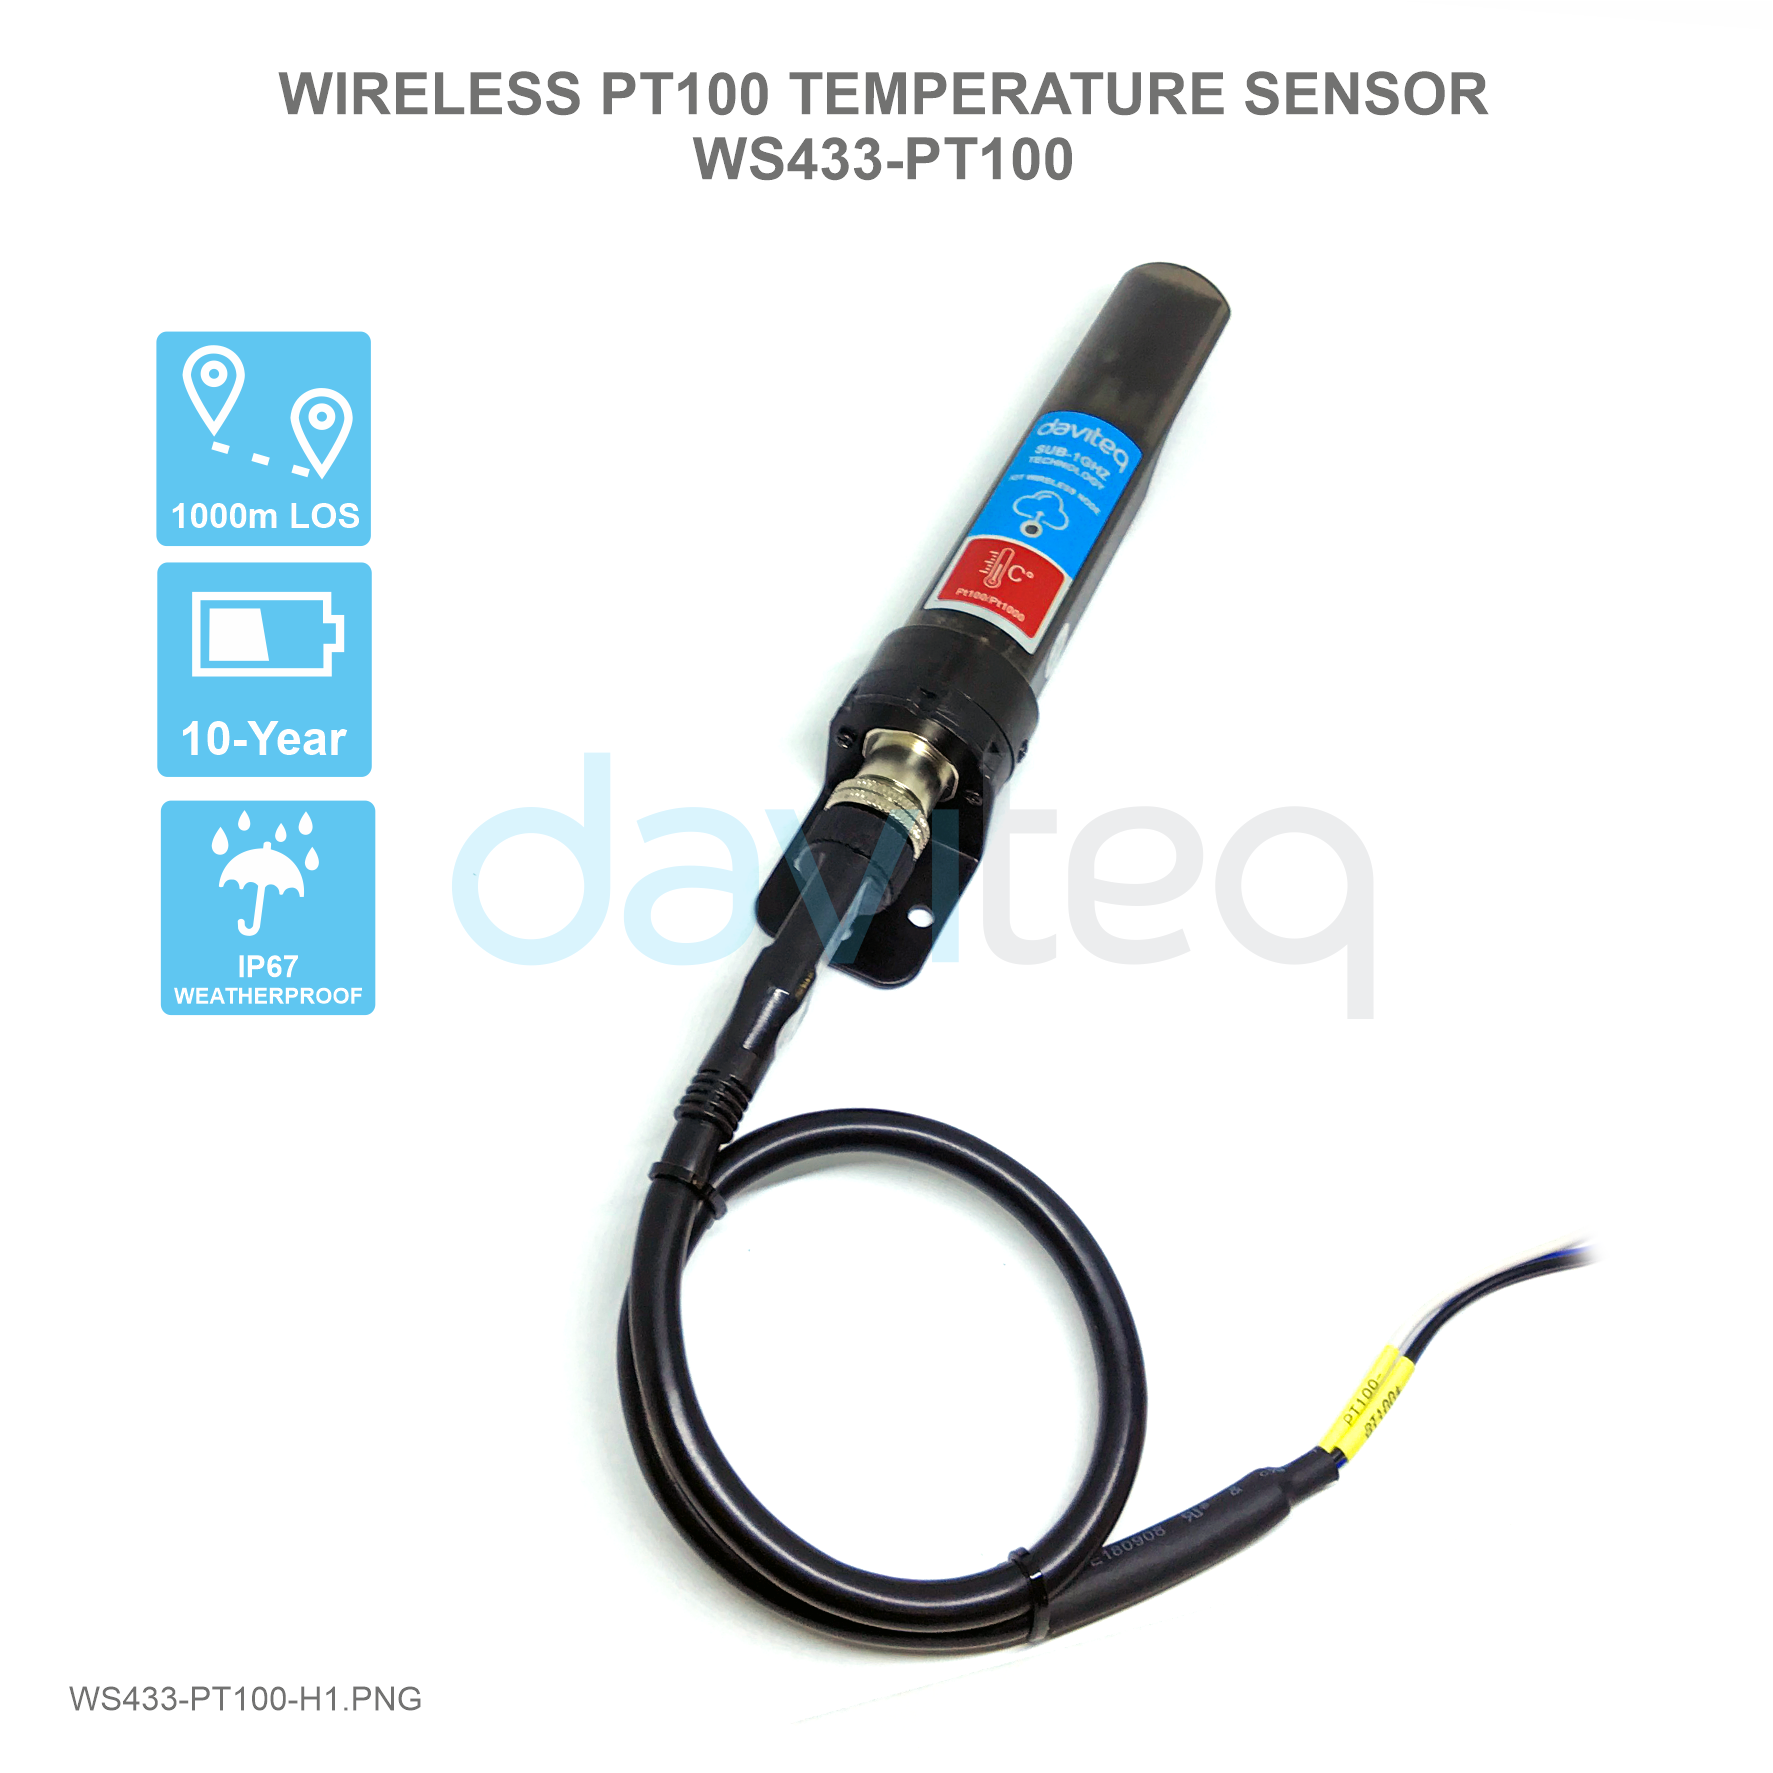 Wireless Pt100 Temperature Sensor